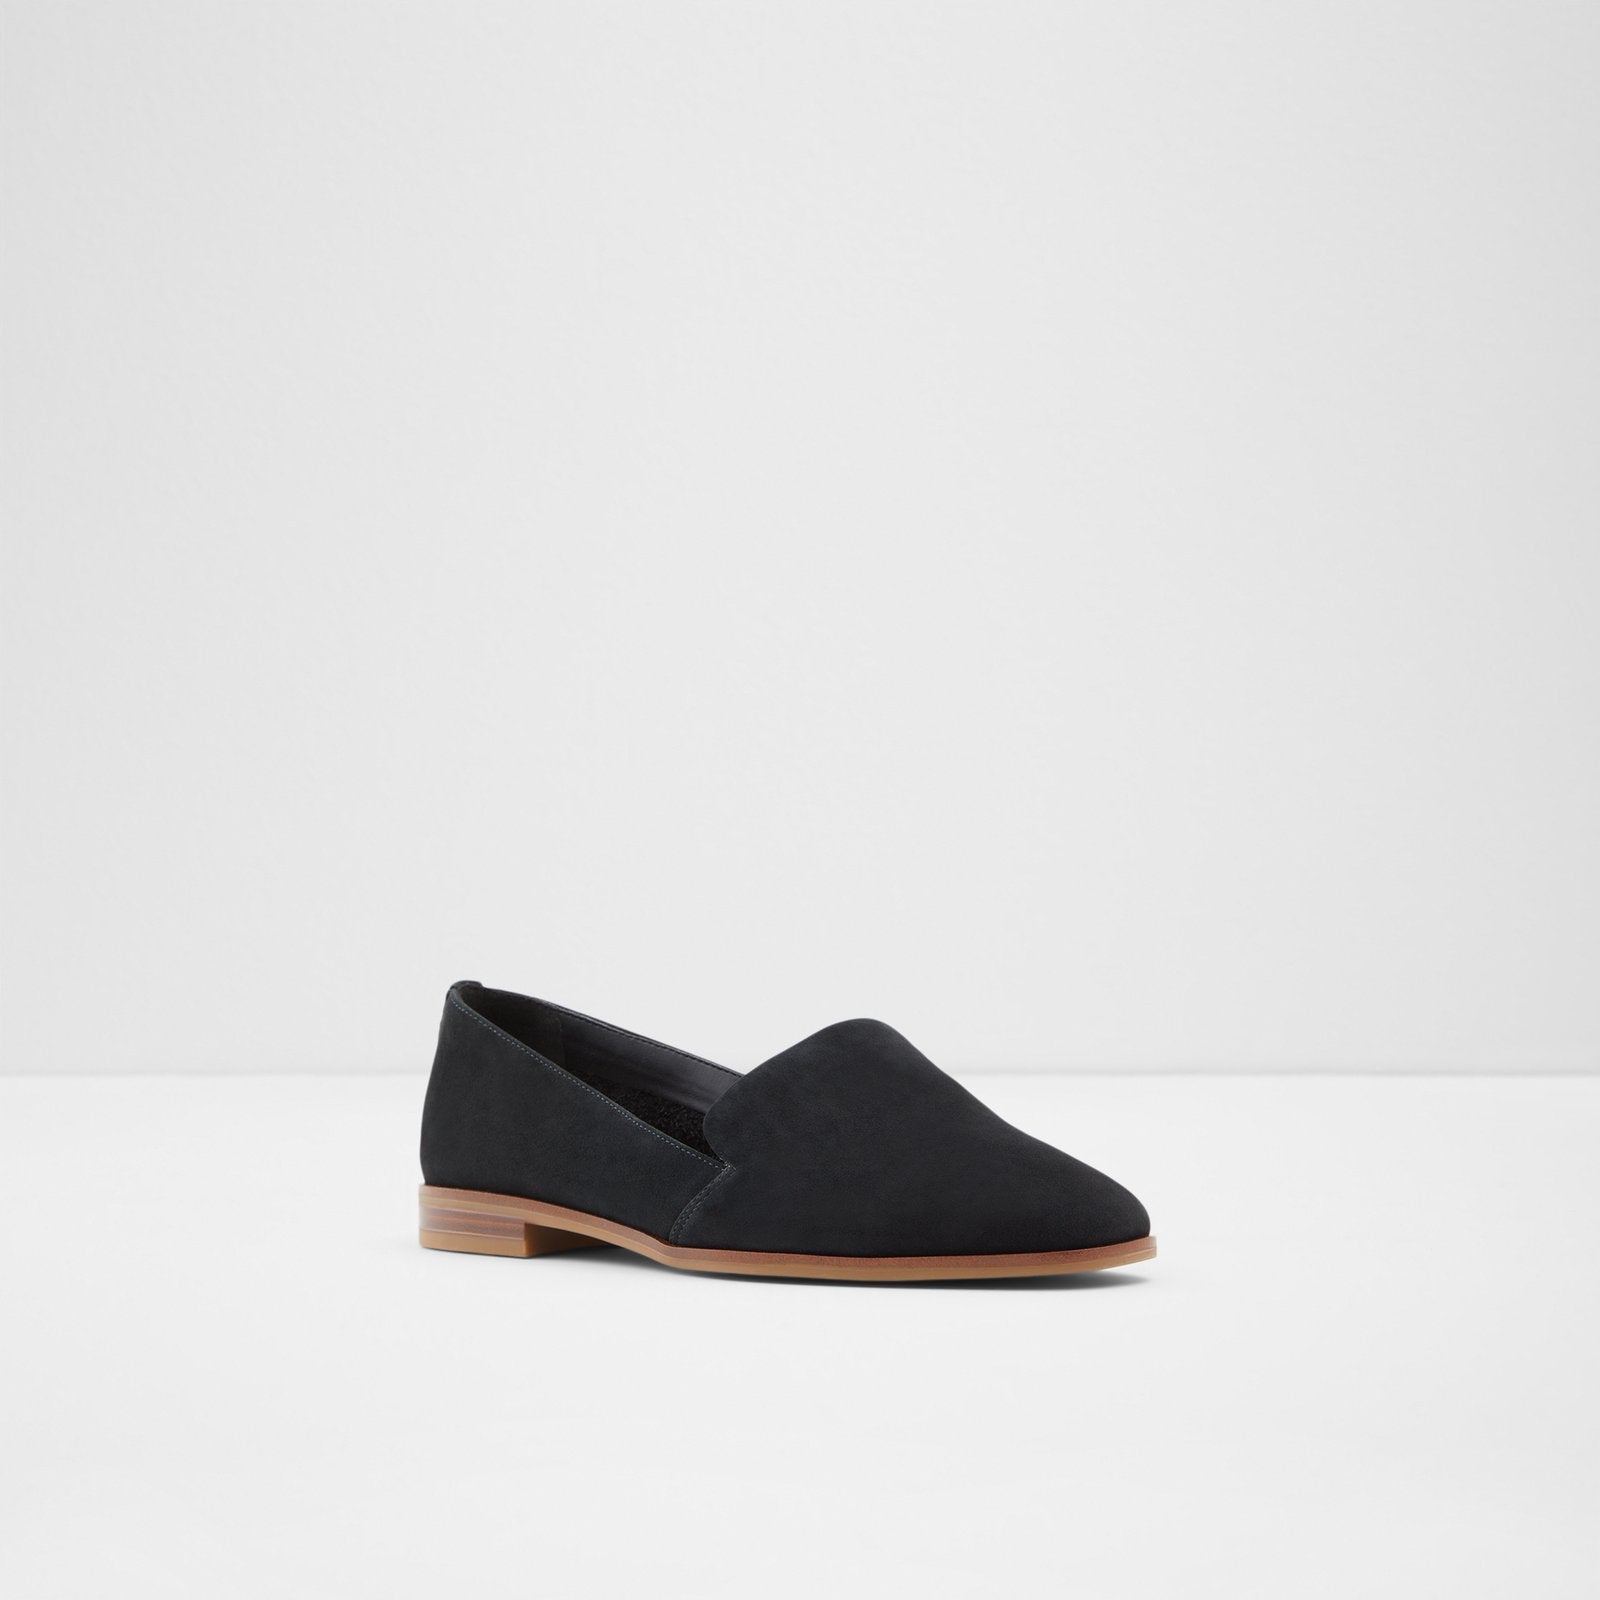 Veadith / Slip Ons Women Shoes - Black - ALDO KSA